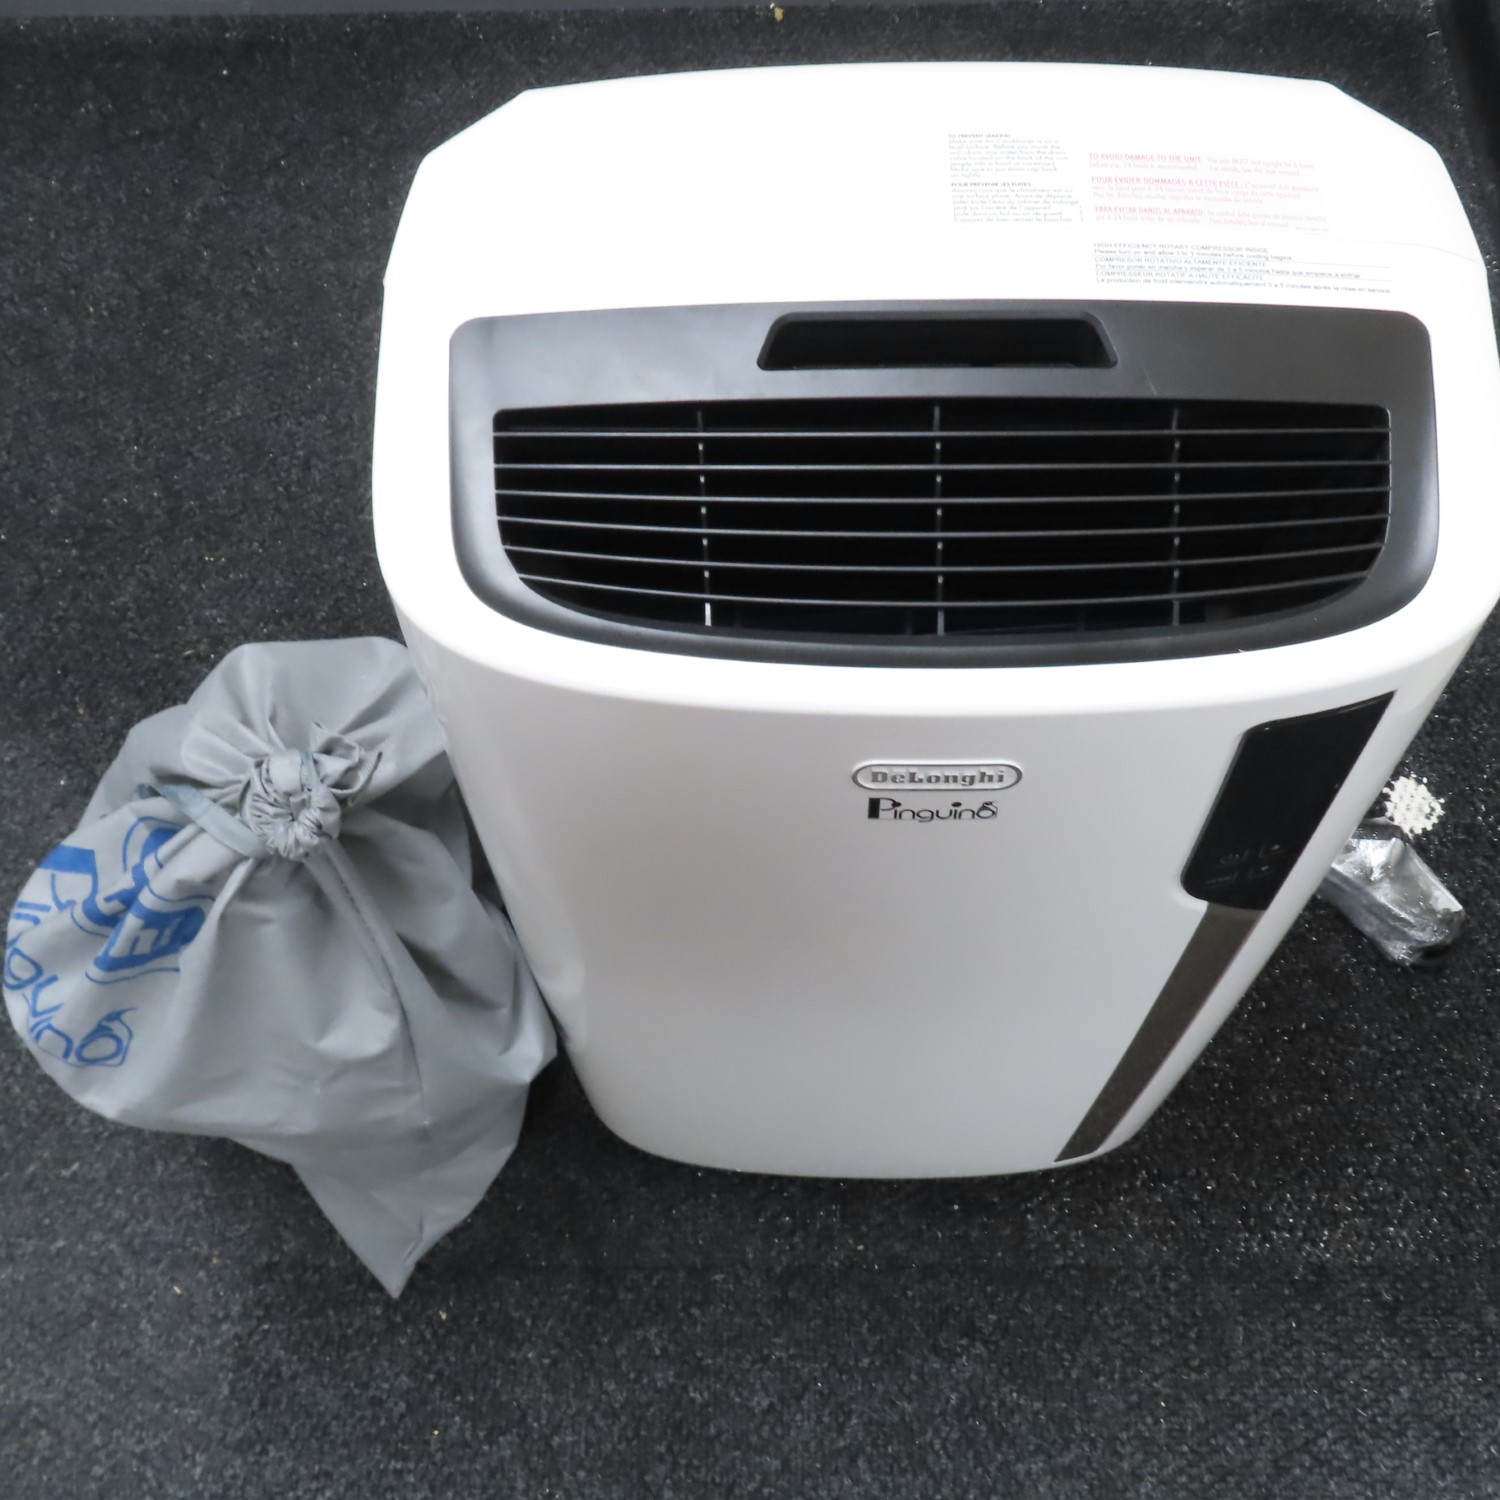  Black + Decker BPACT14WT Portable Air Conditioner